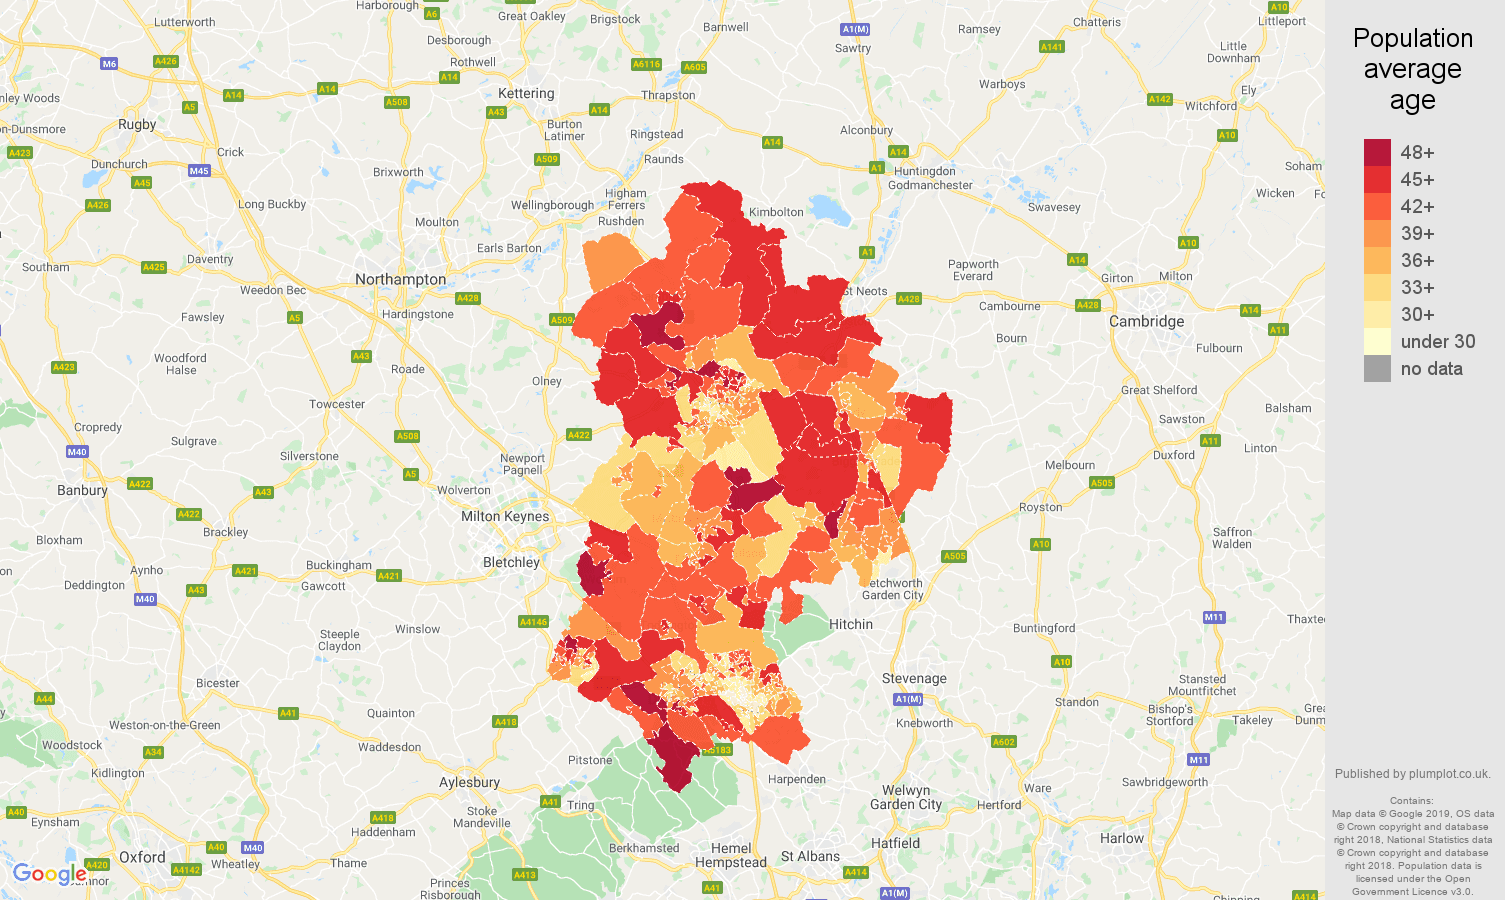 Bedfordshire population average age map